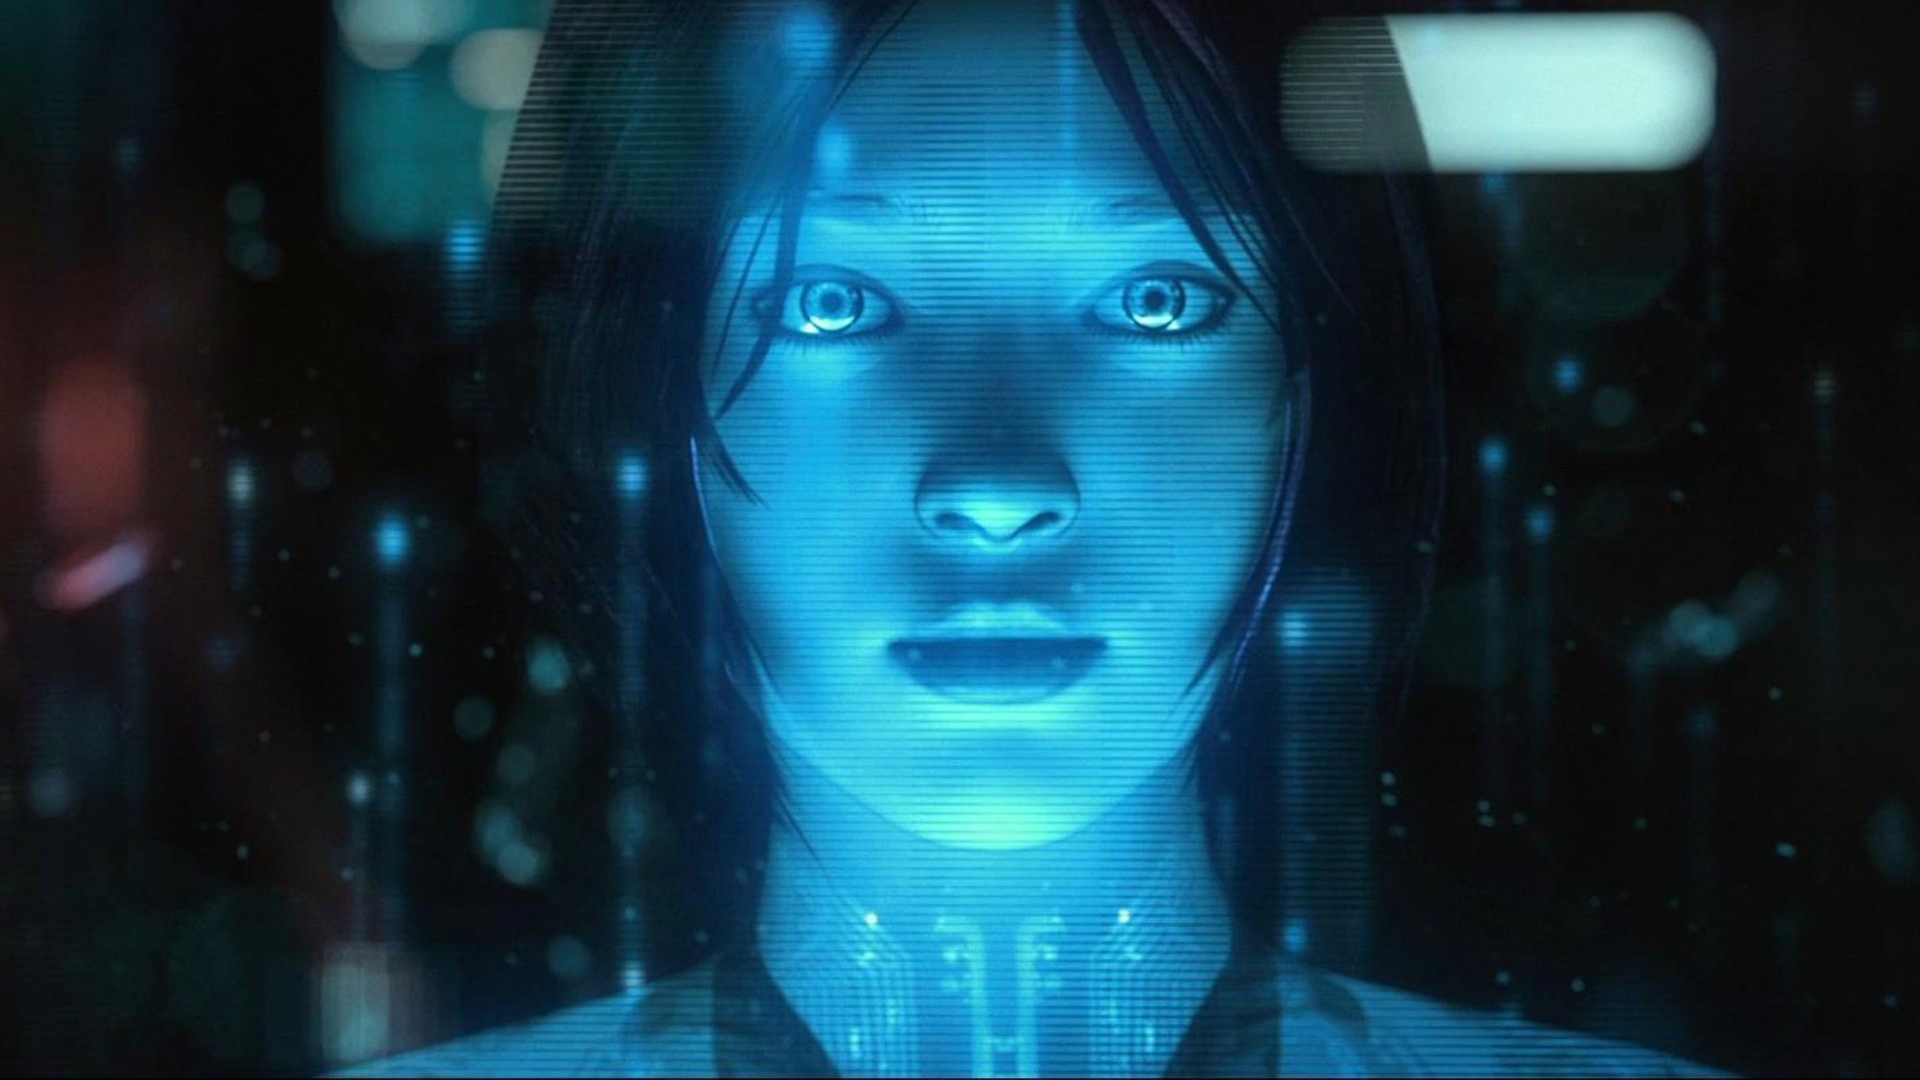  Cortana running on a Windows 10 PC at the companys Windows 10 live